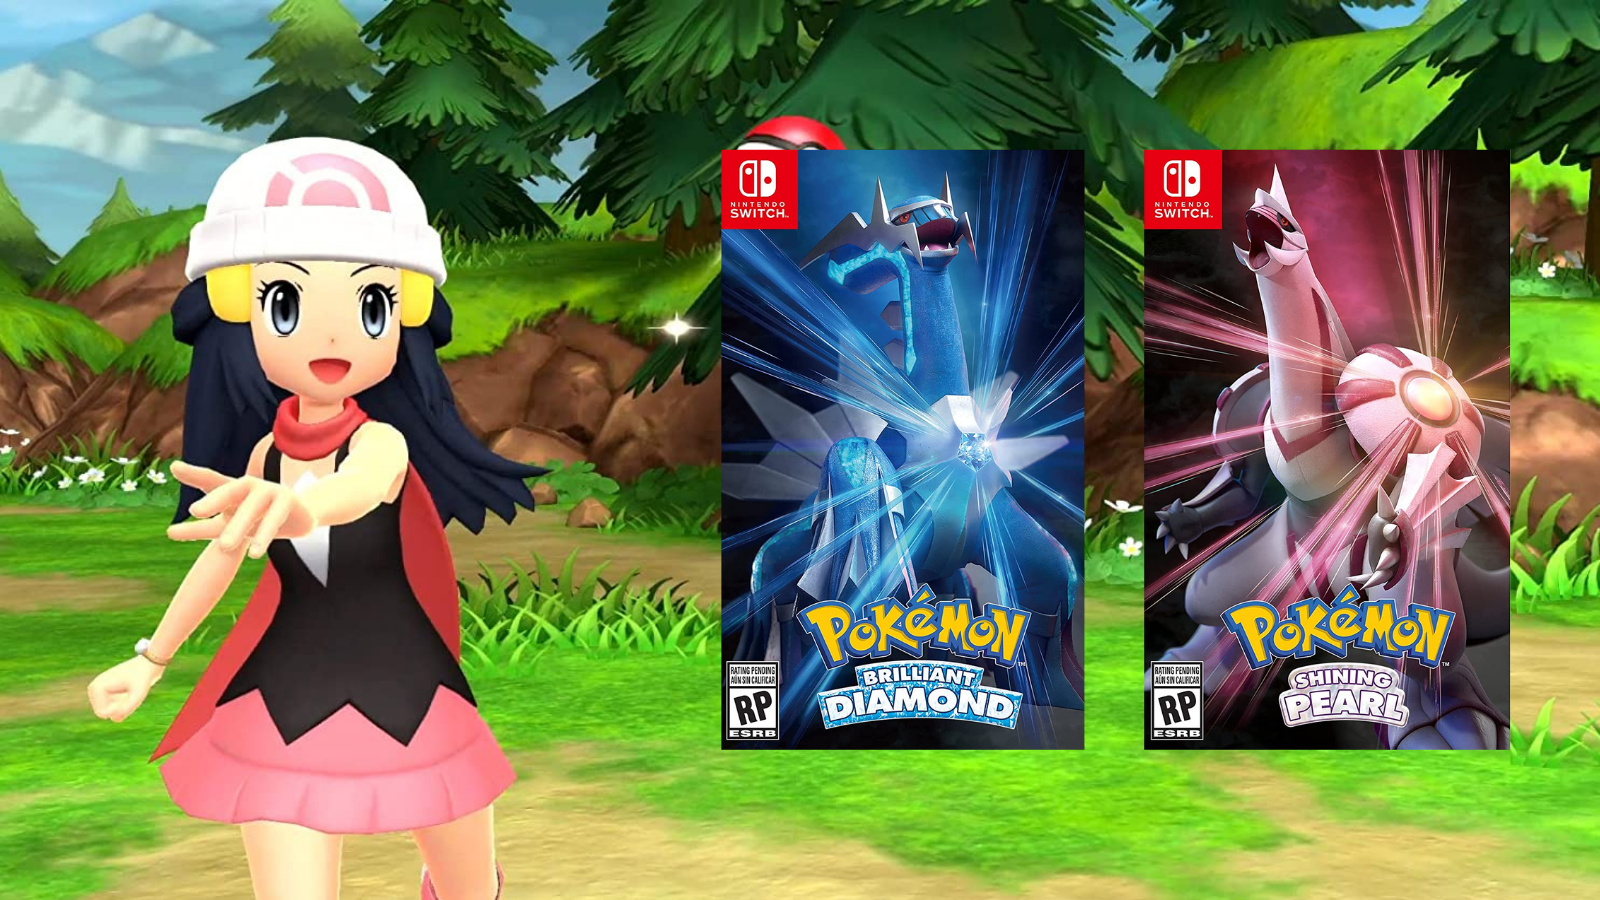 EB Games New Zealand - JUST ANNOUNCED: Get a bonus EB EXCLUSIVE Dialga or  Palkia figurine when you preorder Pokémon Brilliant Diamond or Shining  Pearl! Coming 19 November ➡